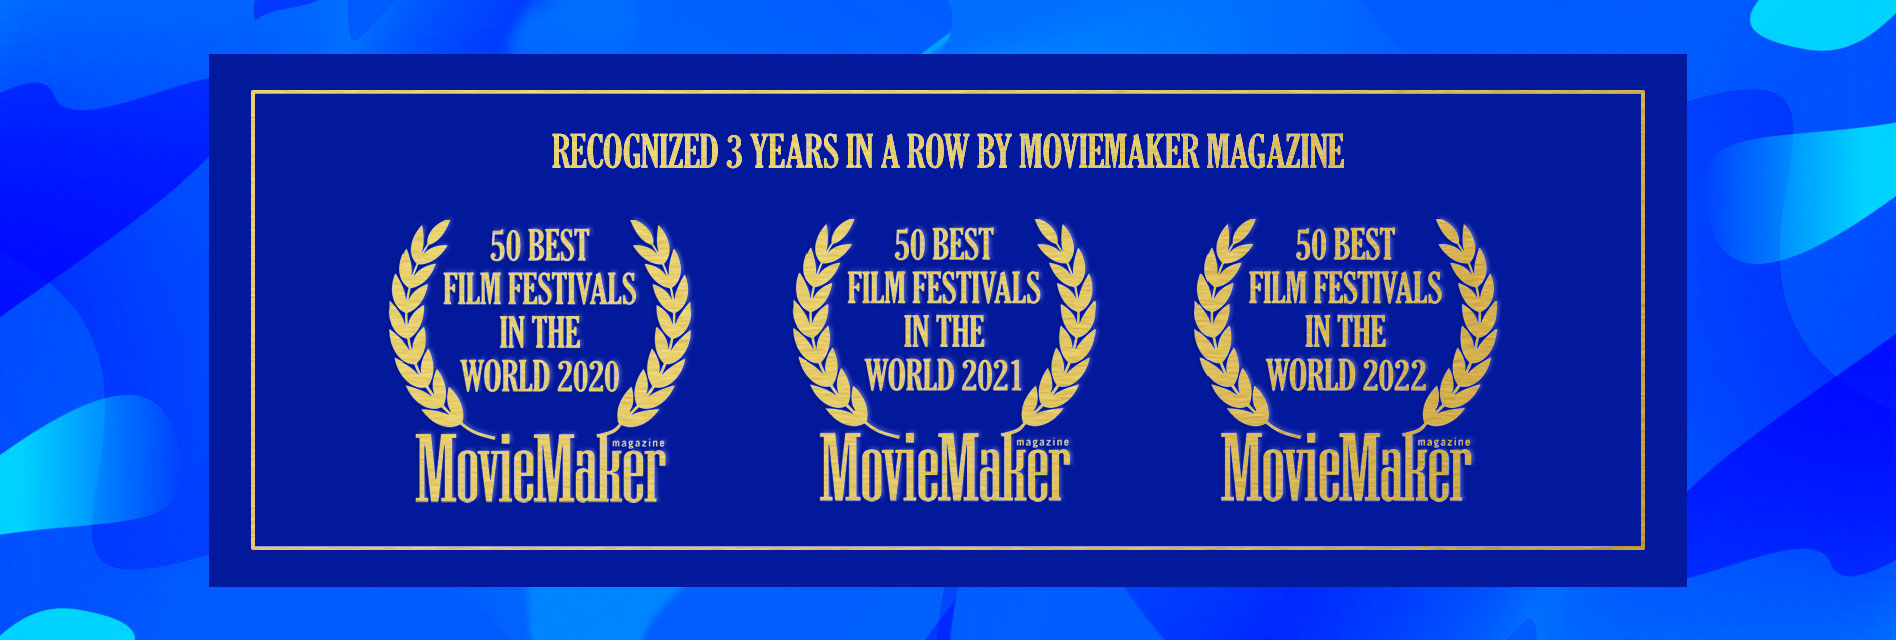 MovieMaker Magazine2